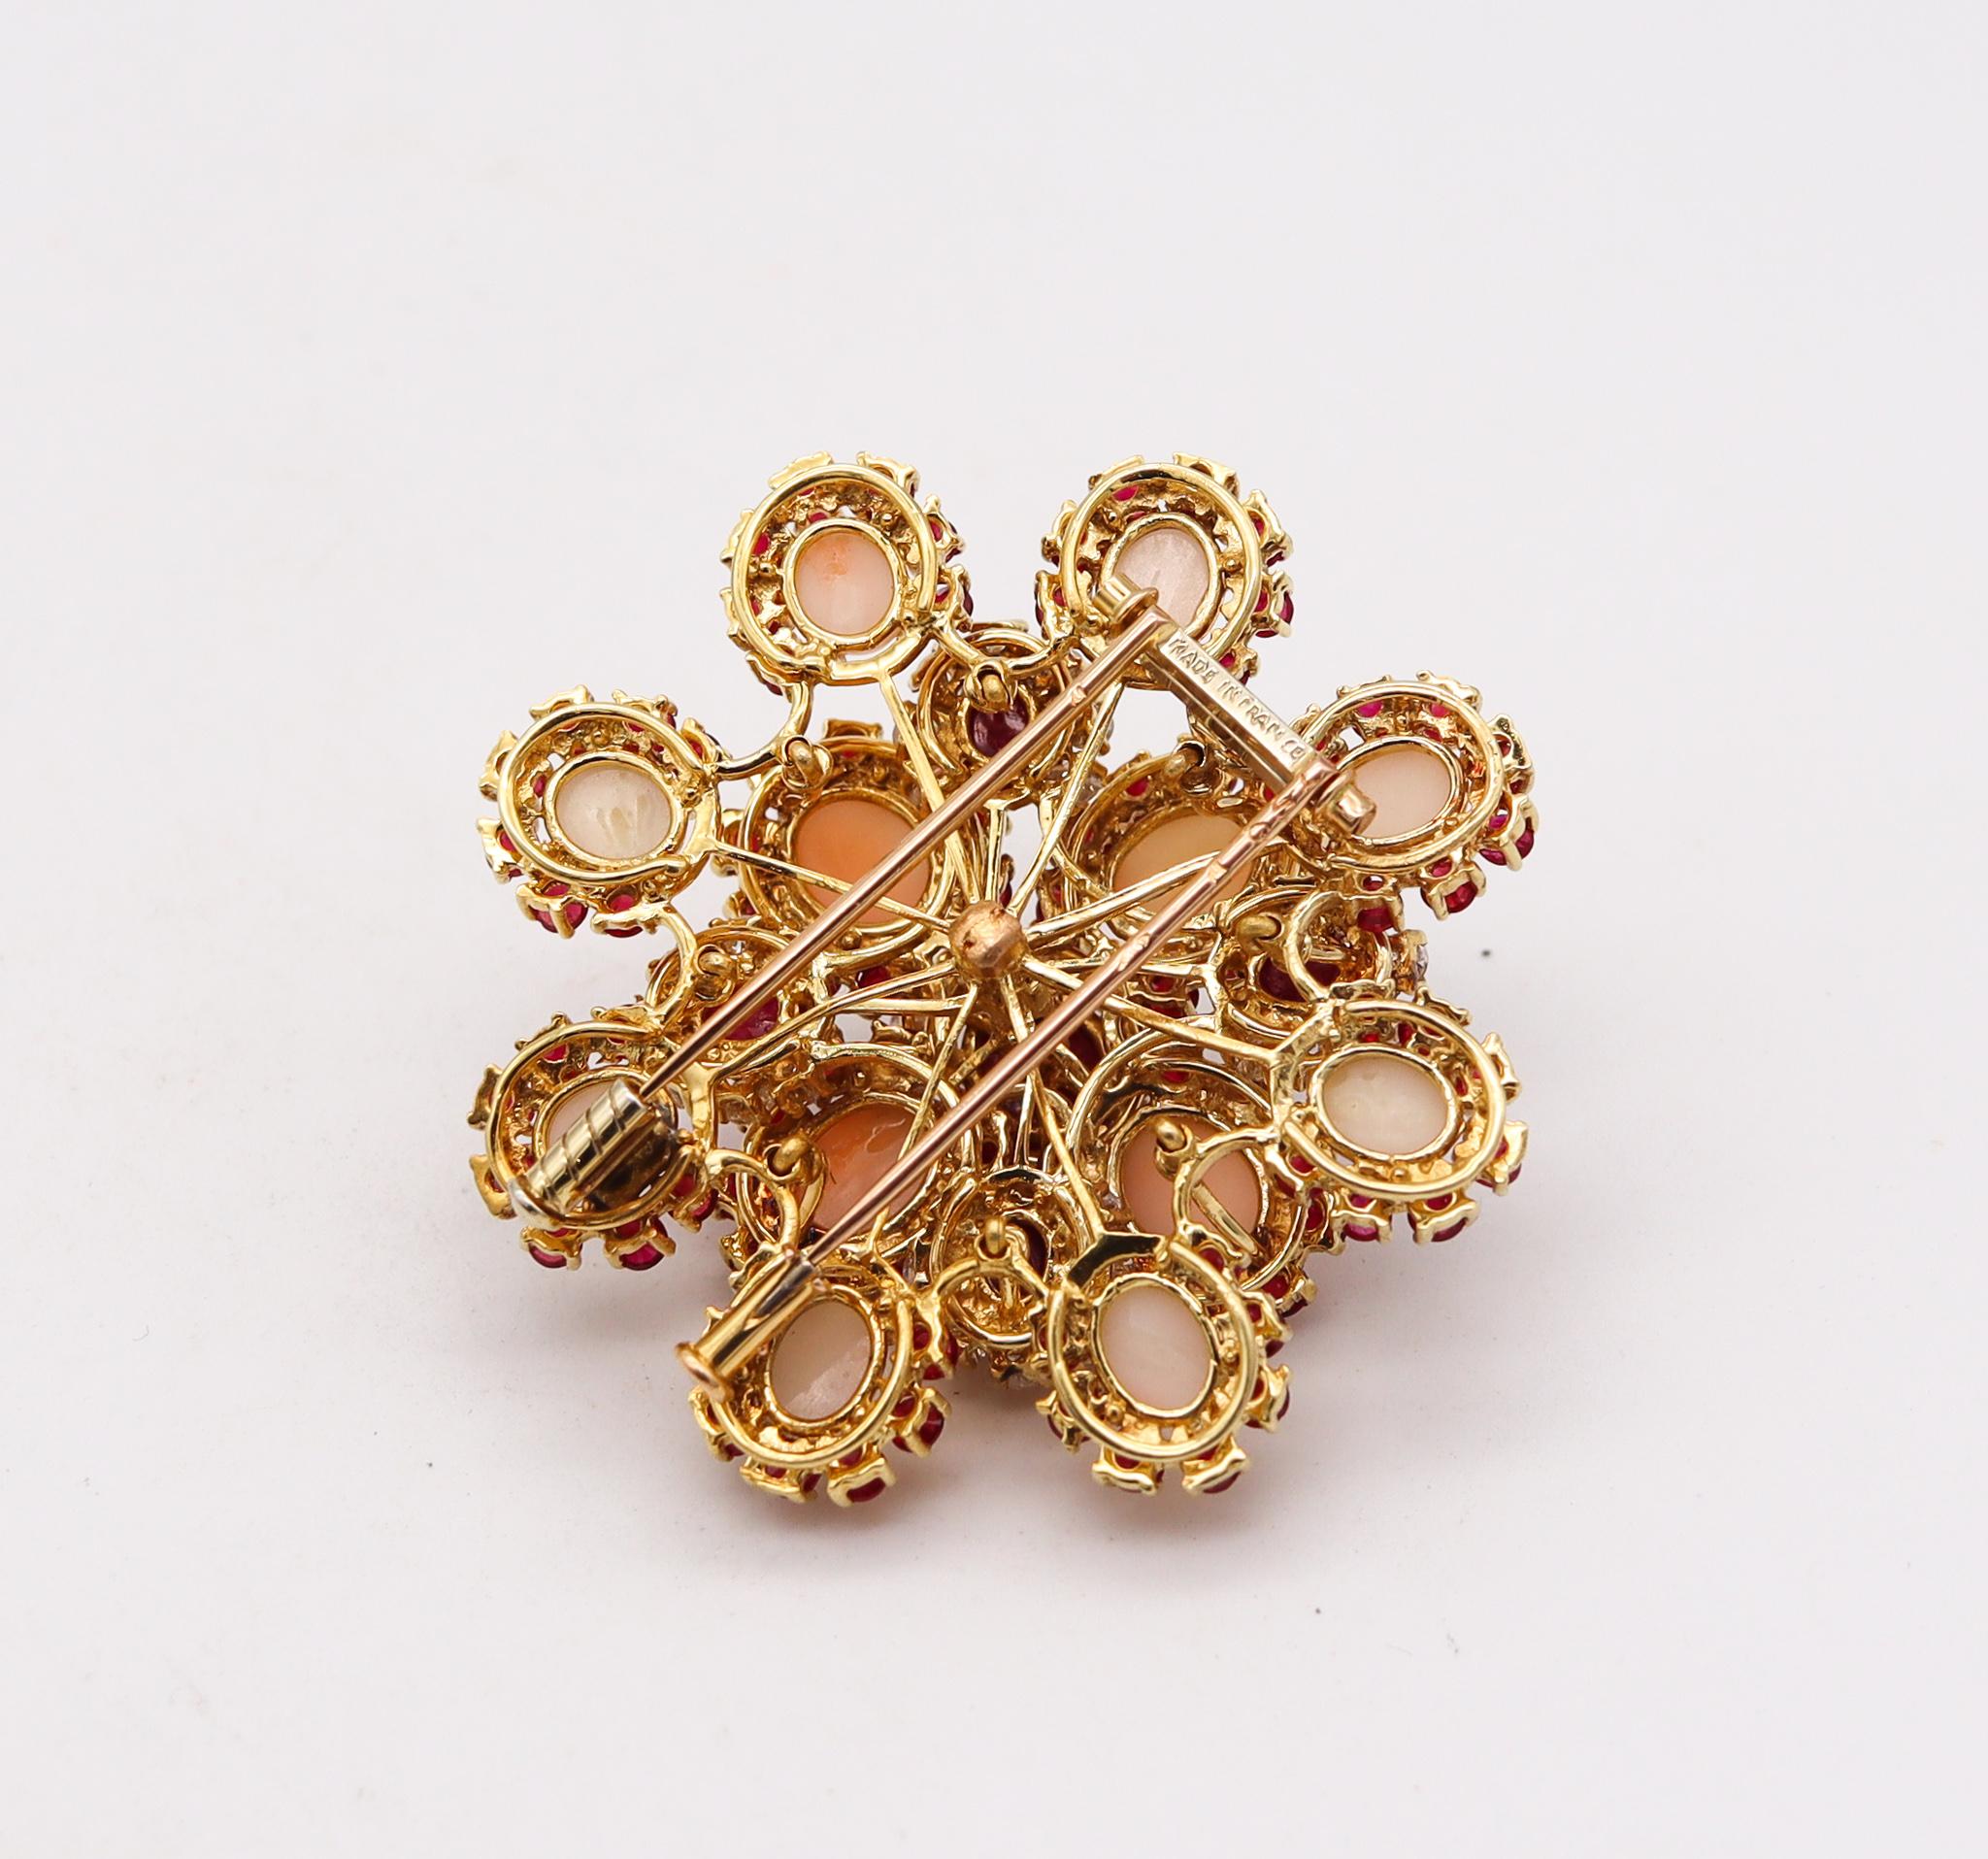 Modernist Pery Et Fils 1960 Paris Pendant Brooch 18Kt Gold 22.53 Cts In Diamonds & Rubies 